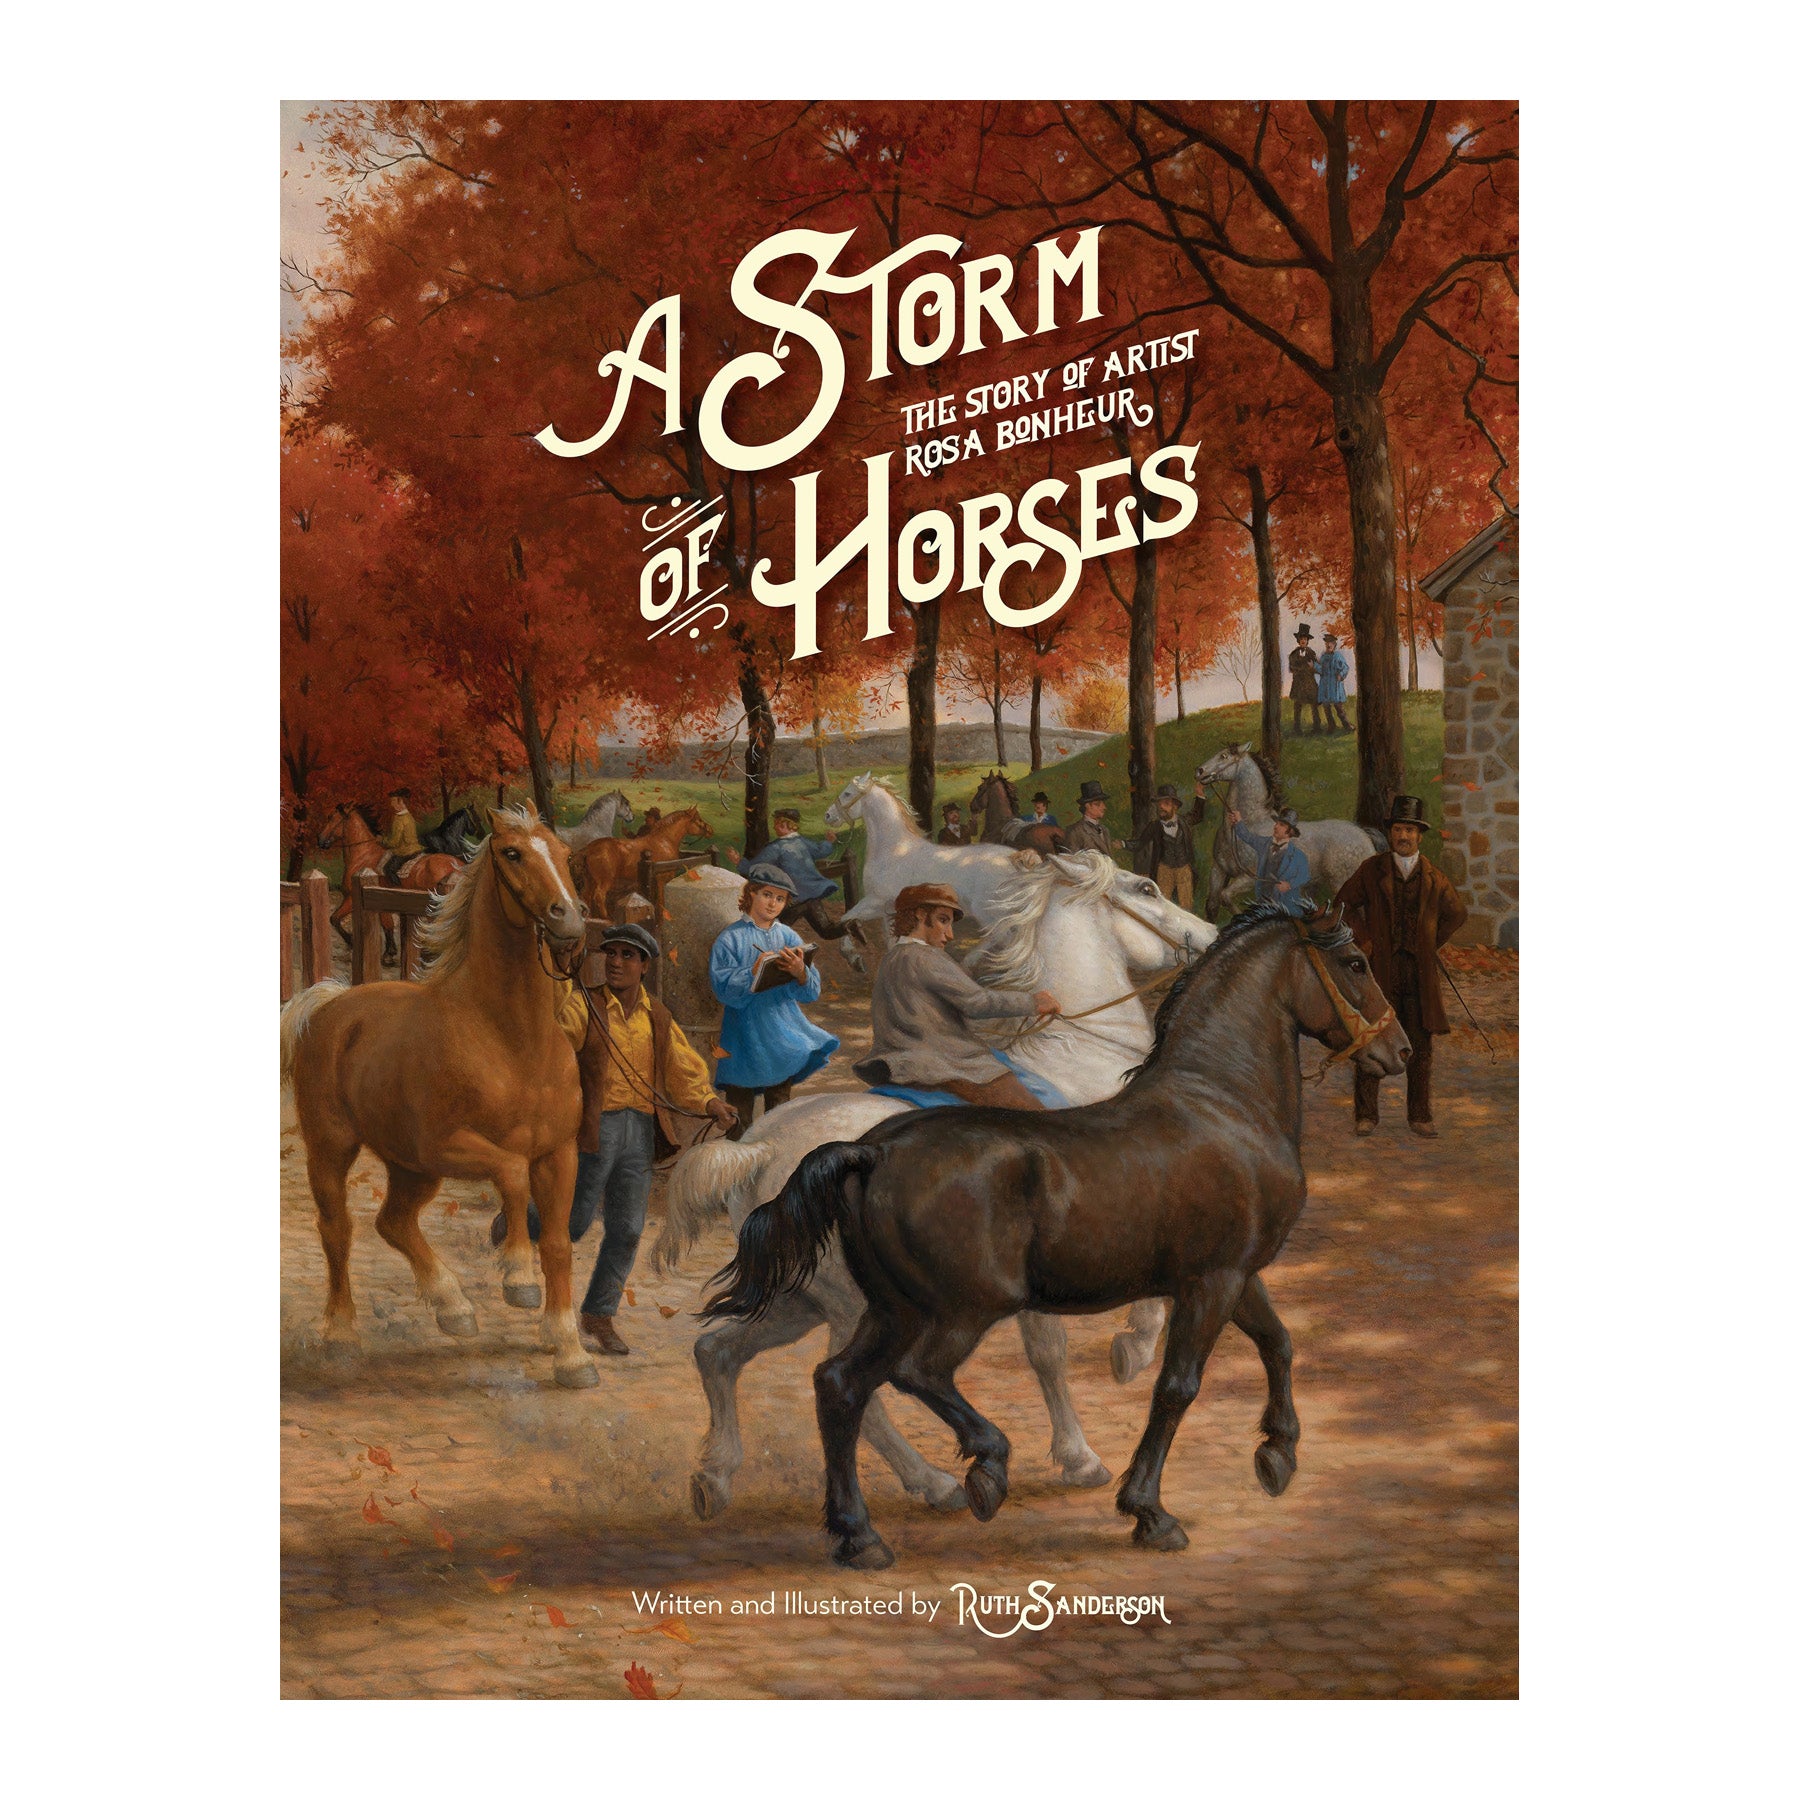 A Storm of Horses: The Story of Artist Rosa Bonheur